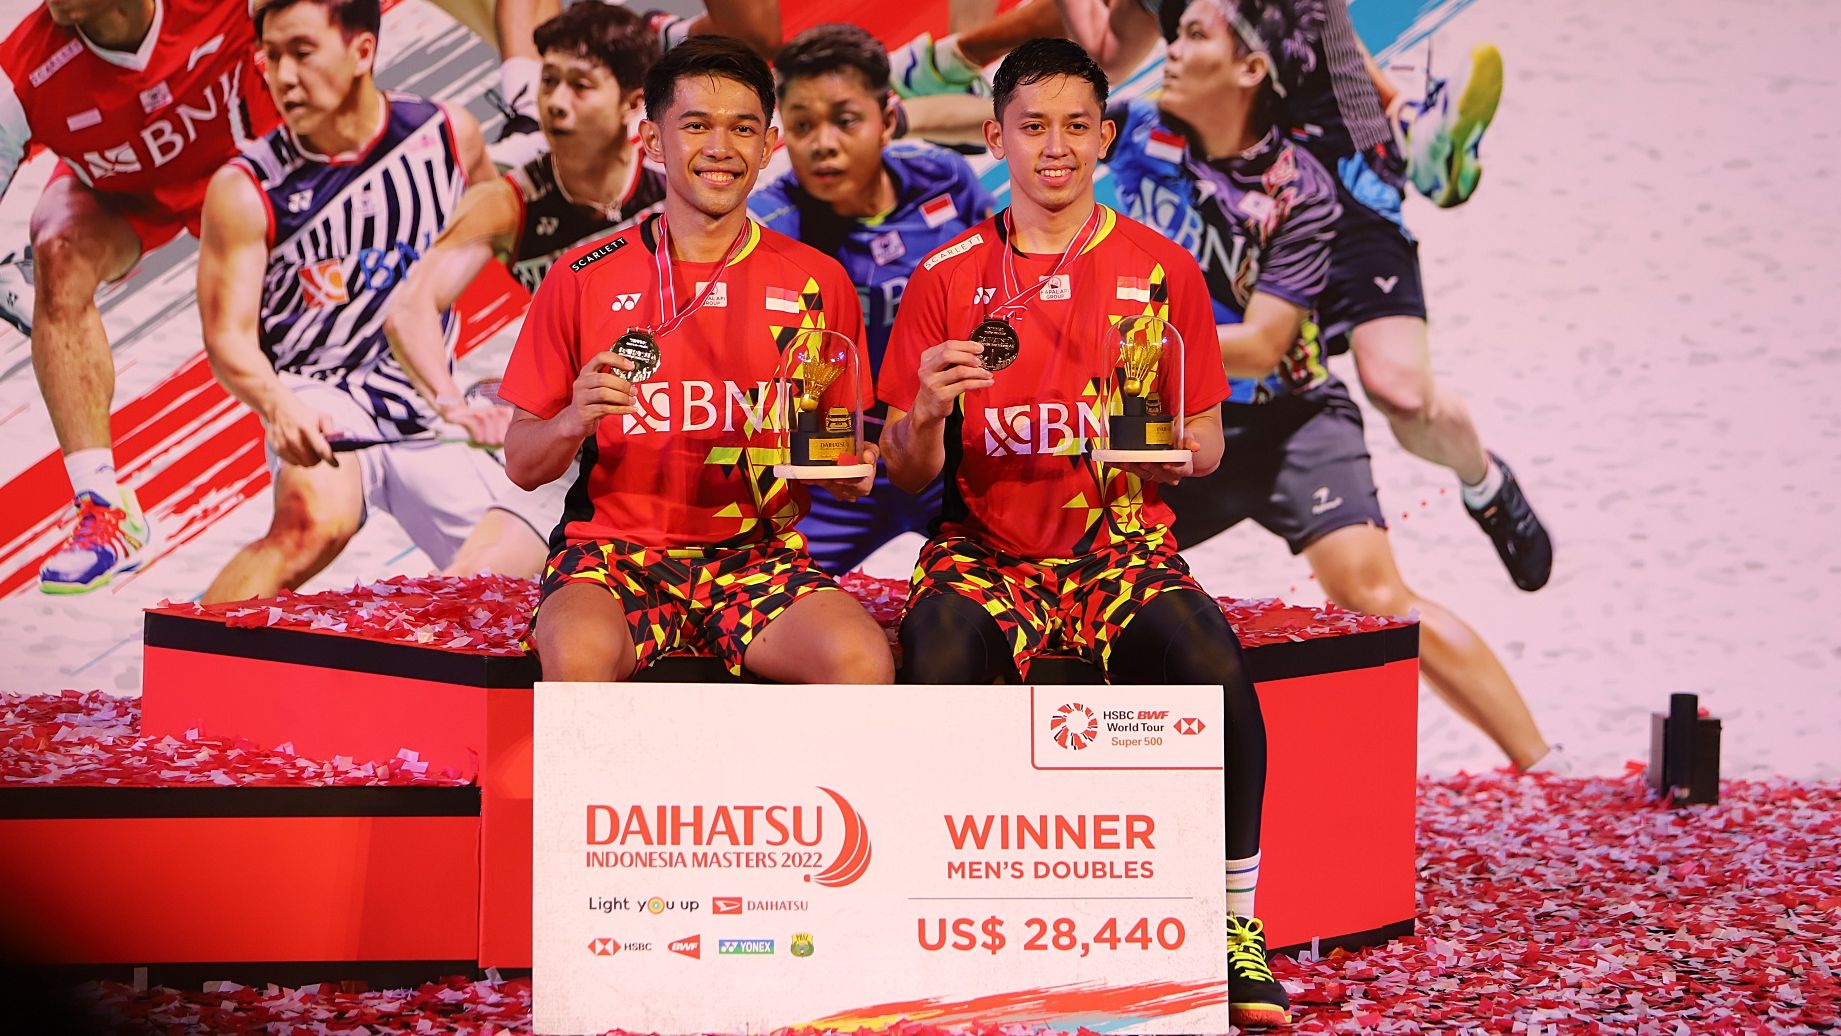 Bagi publik tuan rumah, keberhasilan Fajar Alfian/Muhammad Rian Ardianto menjuarai nomor ganda putra jadi penutup yang manis dari rangkaian penyelenggaraan Indonesia Masters 2022.